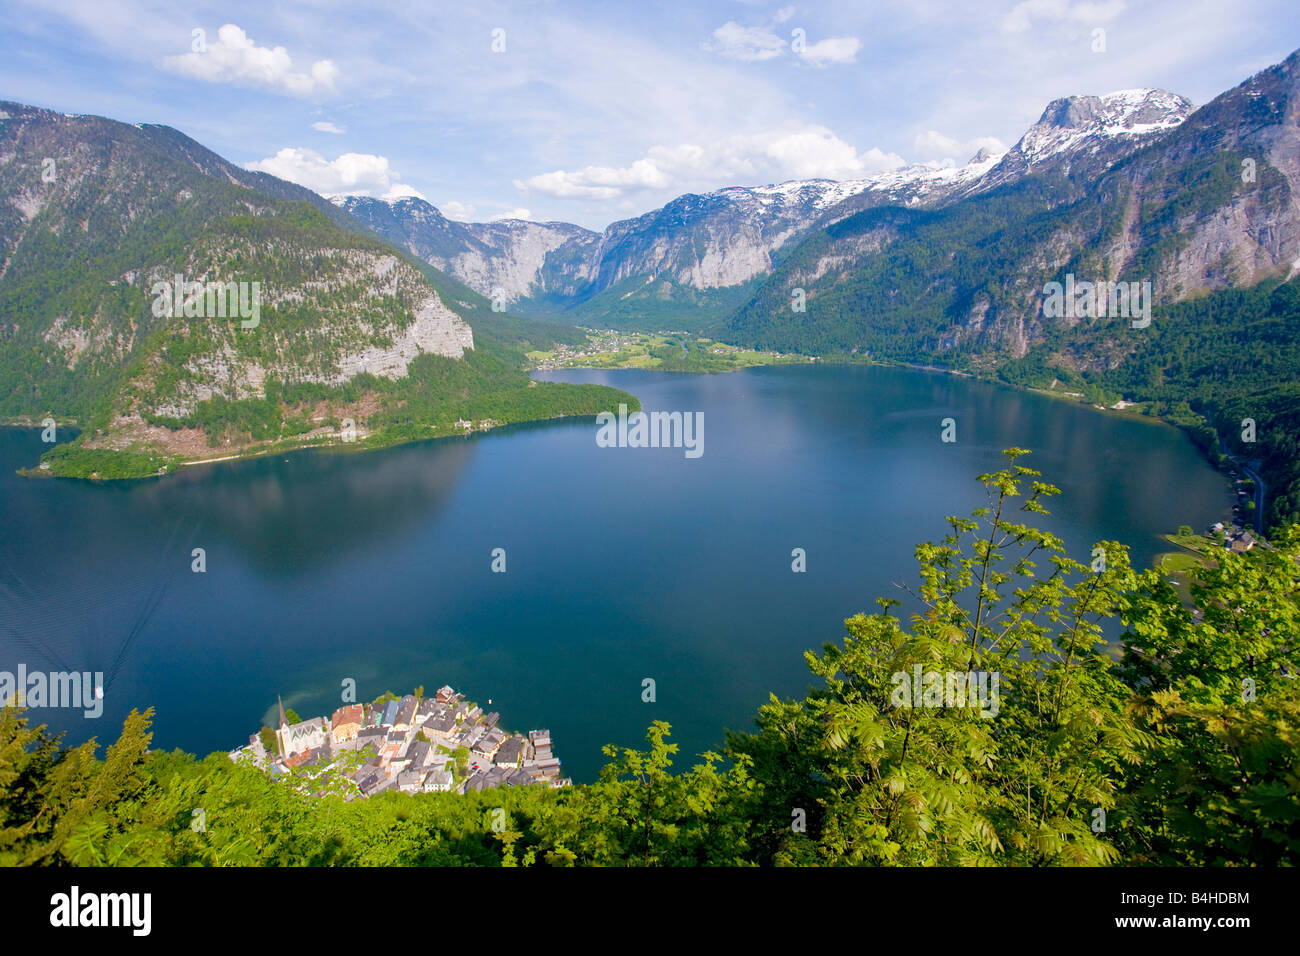 High angle view of lake surrounded by mountain, Lake Hallstatt, Hallstadt, Salzkammergut, Austria Stock Photo